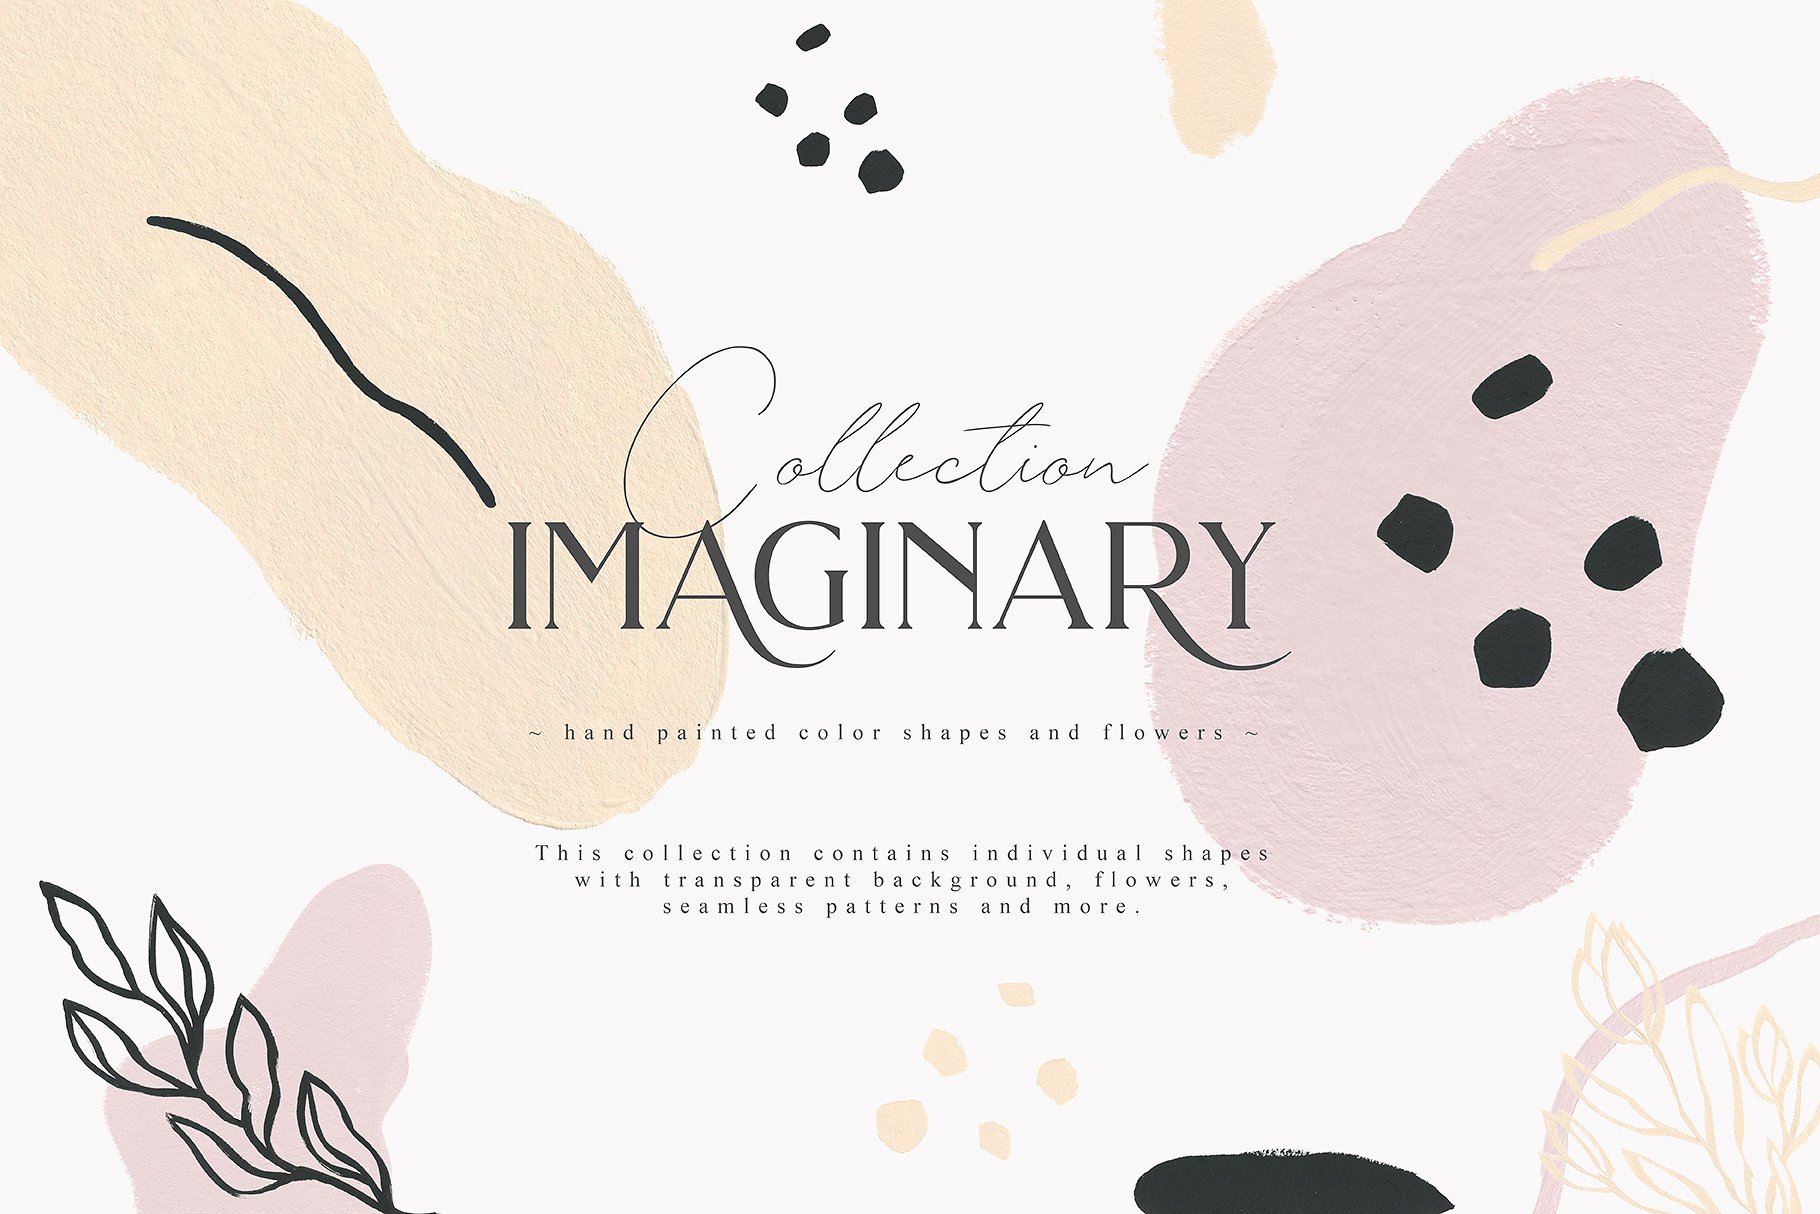 抽象的点状块状植物花朵图形合集 Imaginary Collection插图